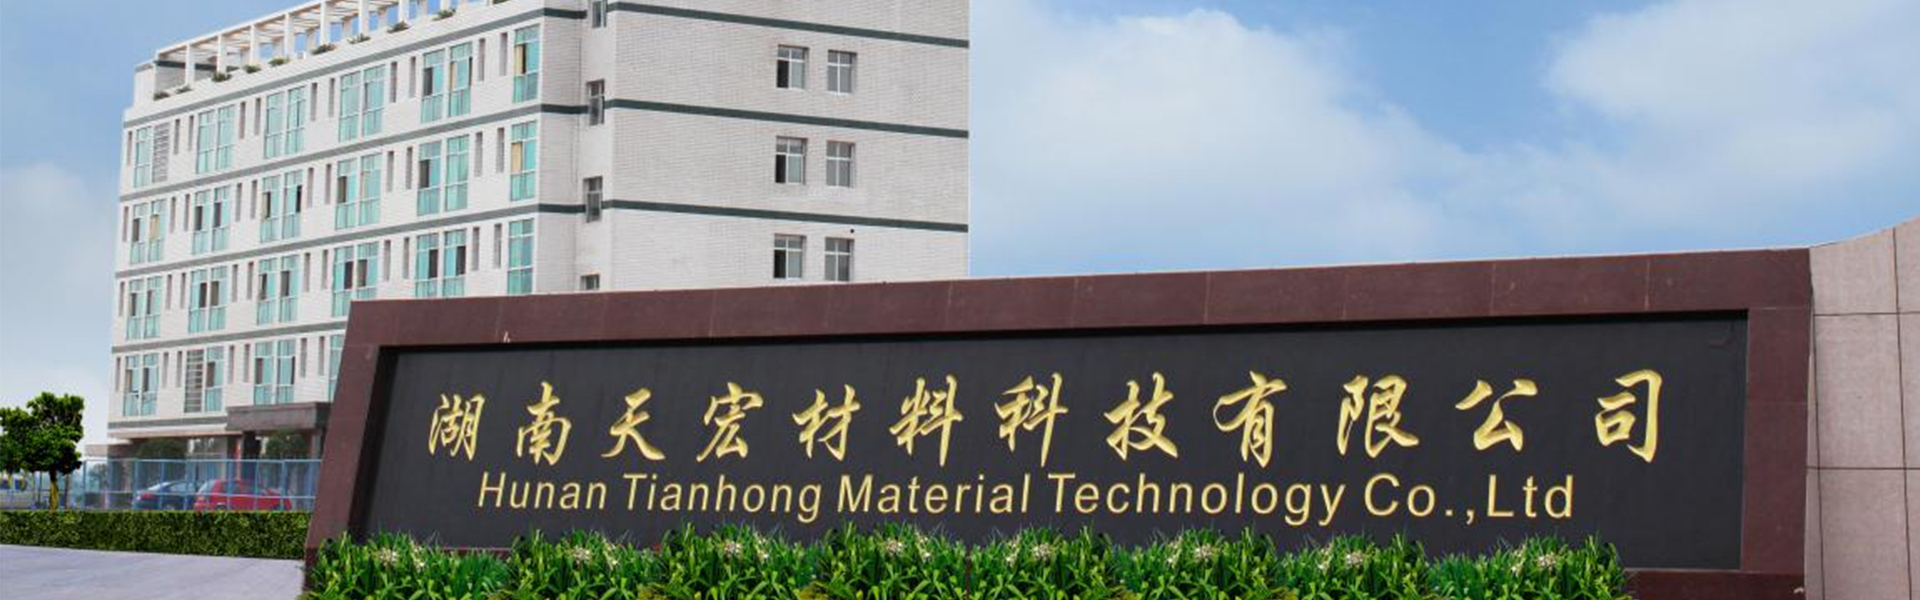 Hunan Tianhong Material Technology Co., Ltd